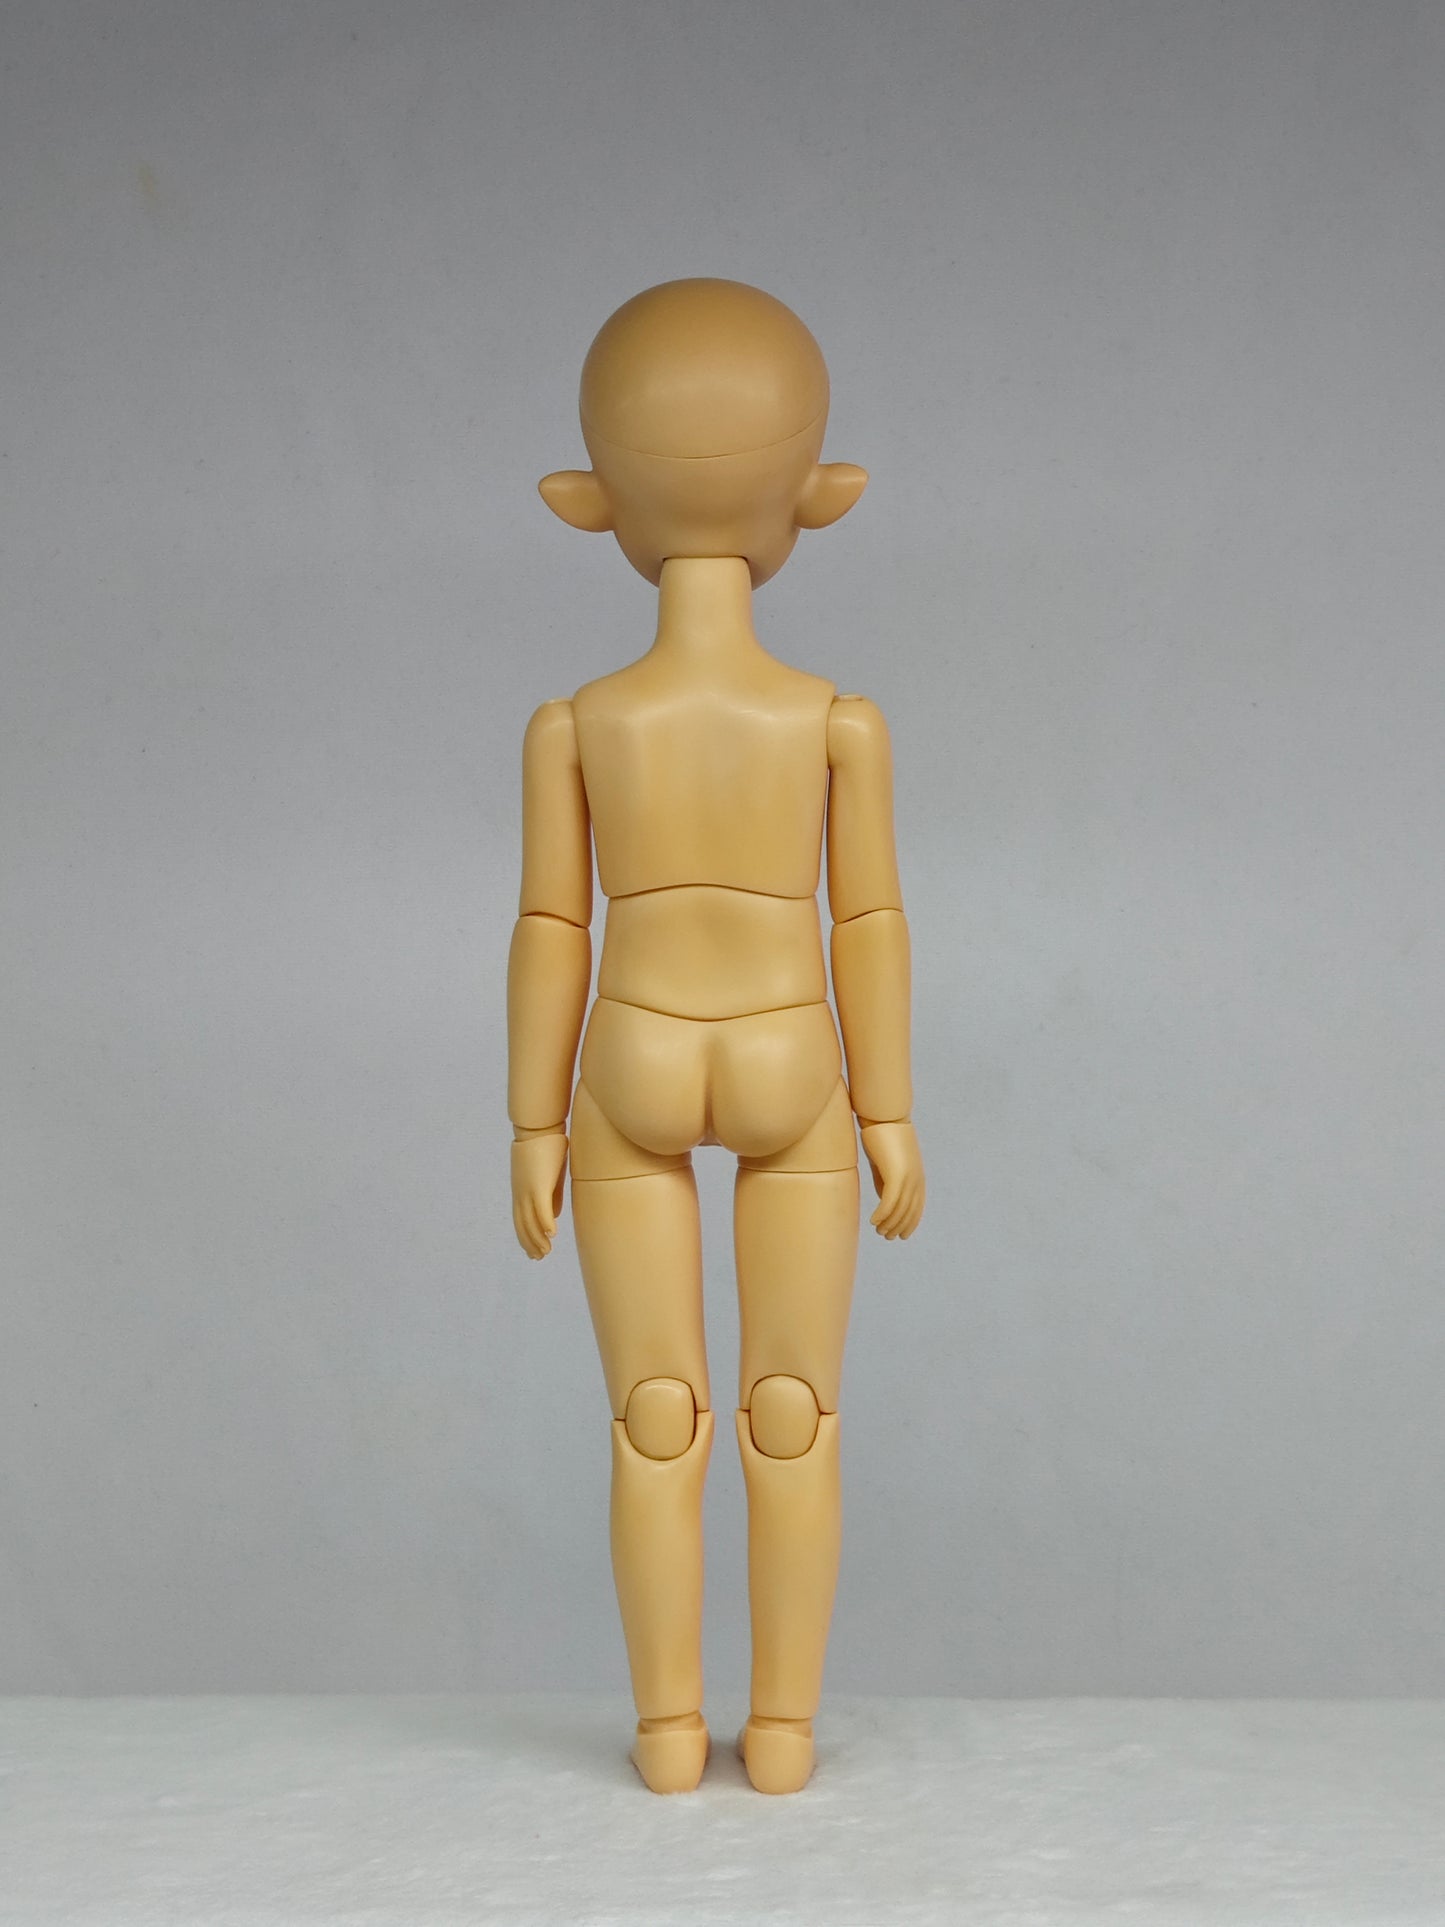 1/6 30cm boy doll Quintus in tan skin with fullset